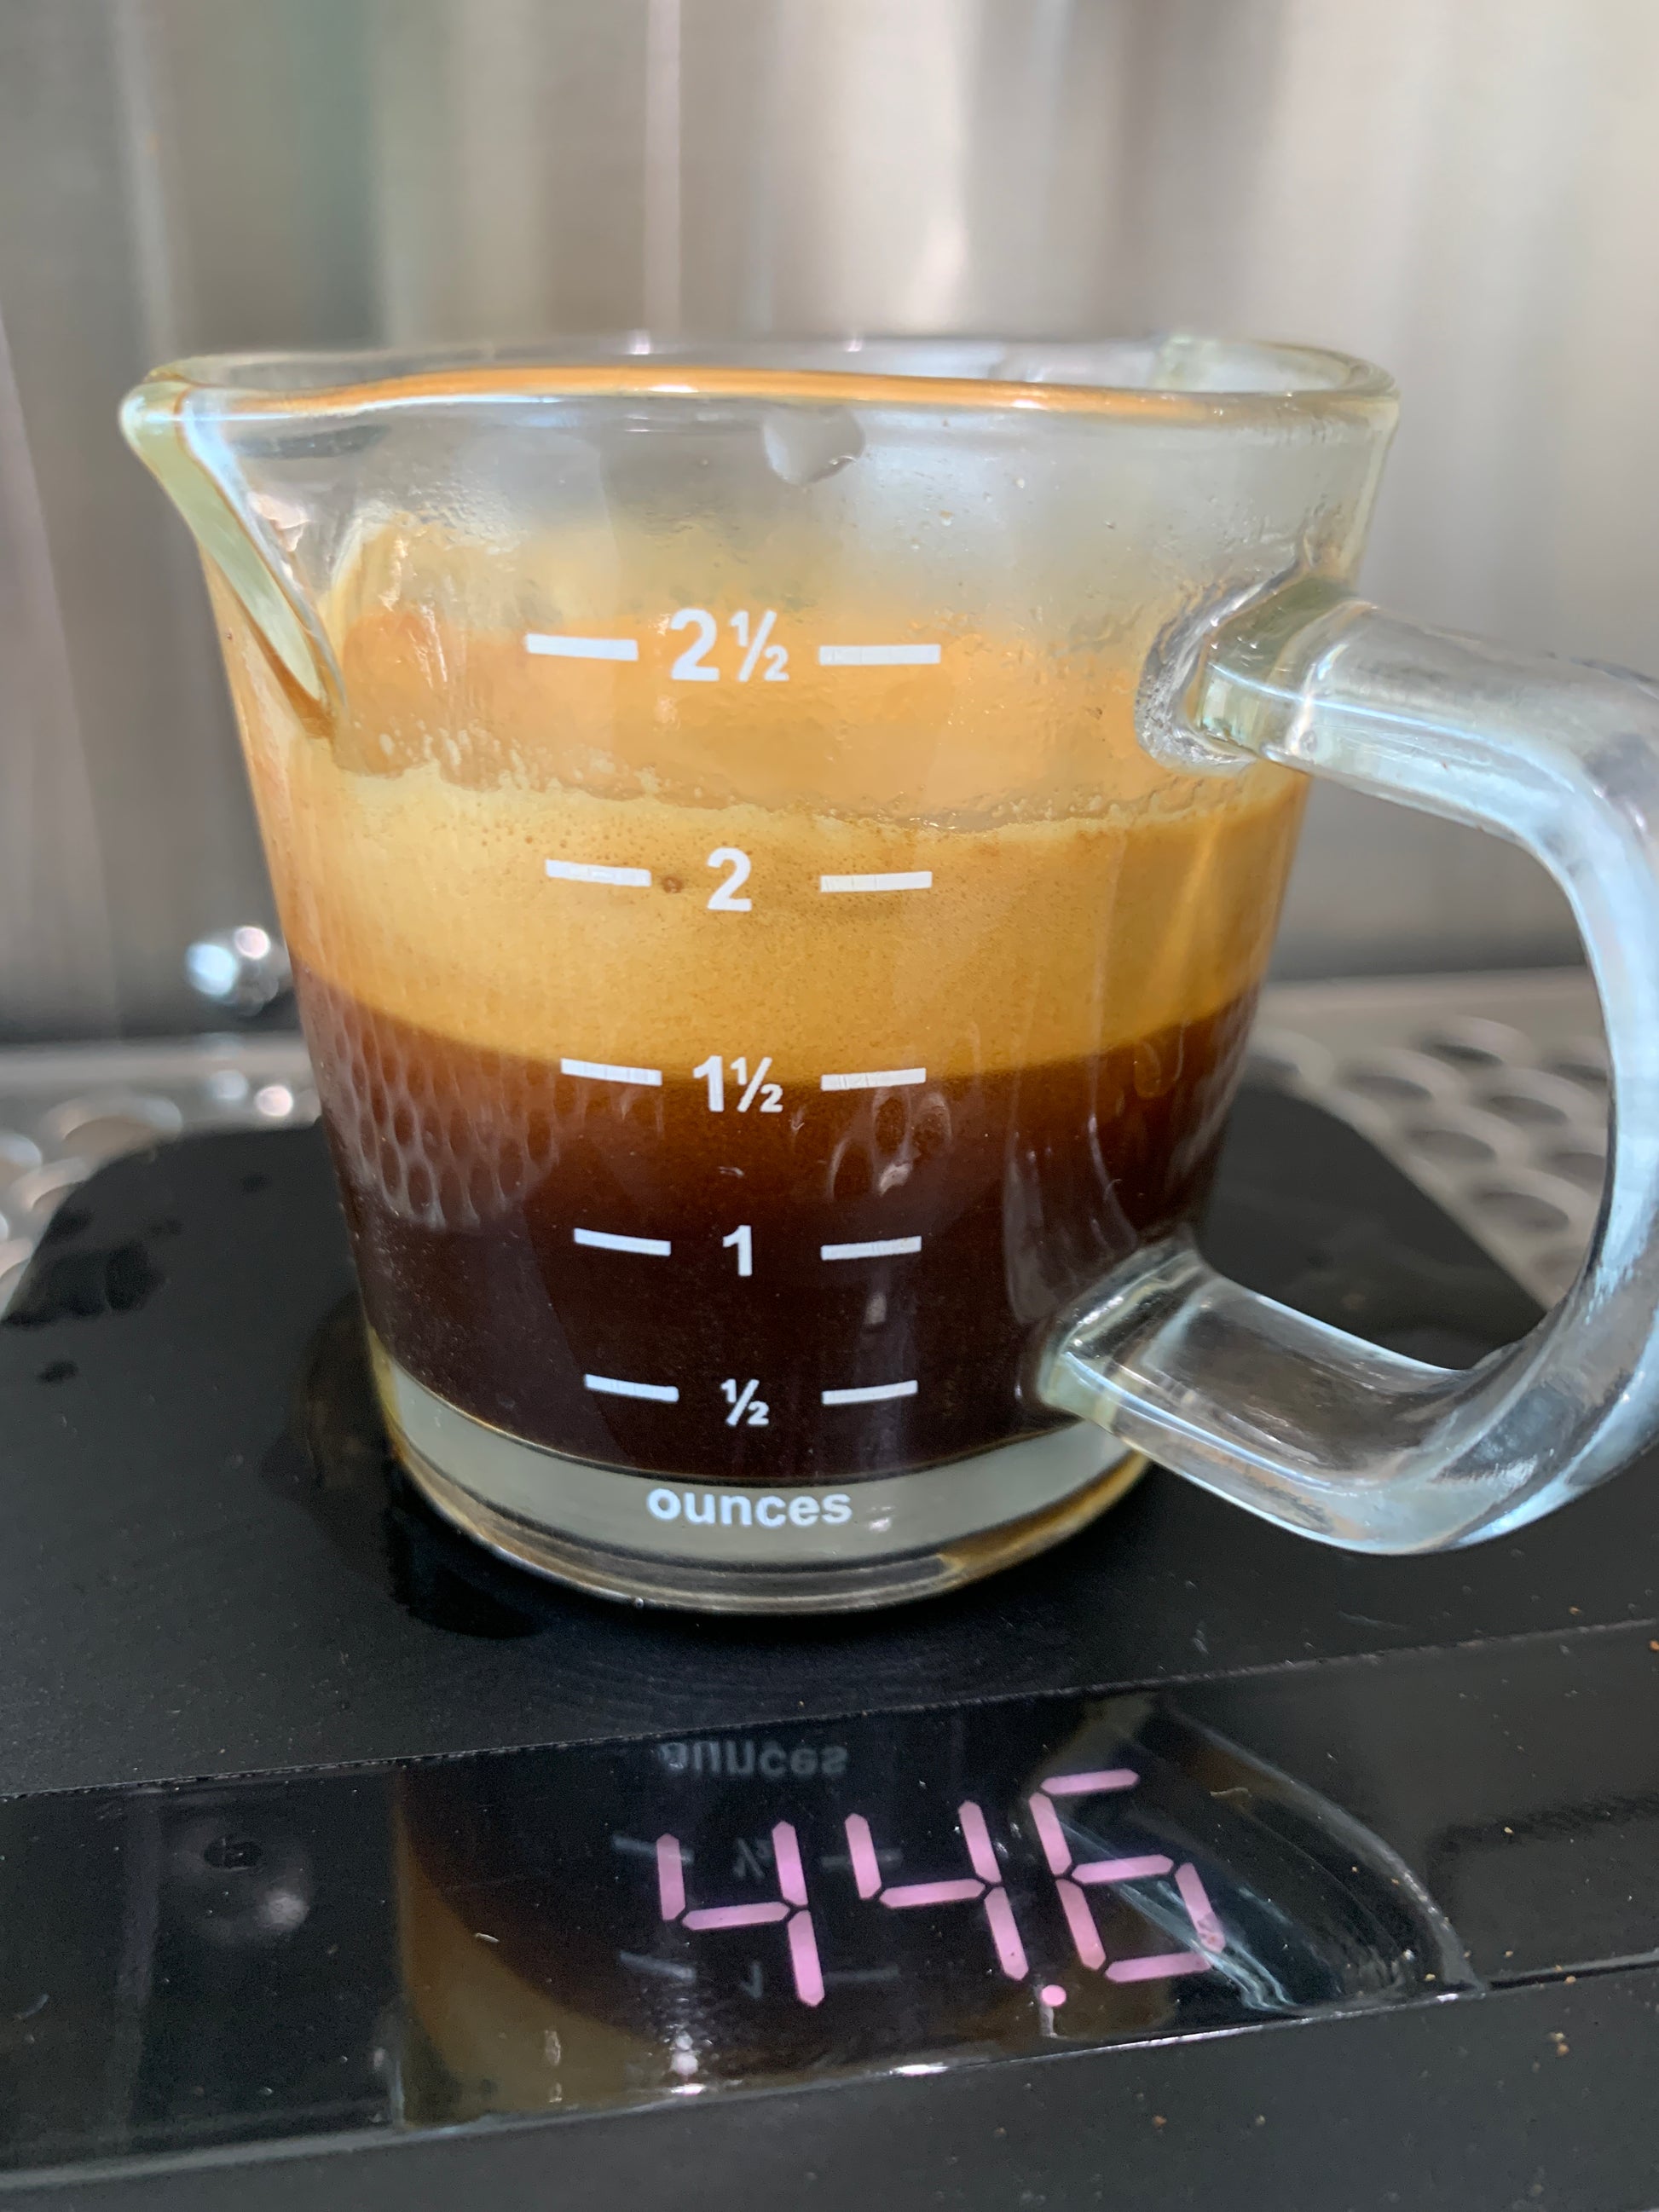 Espresso calibration glass x 1